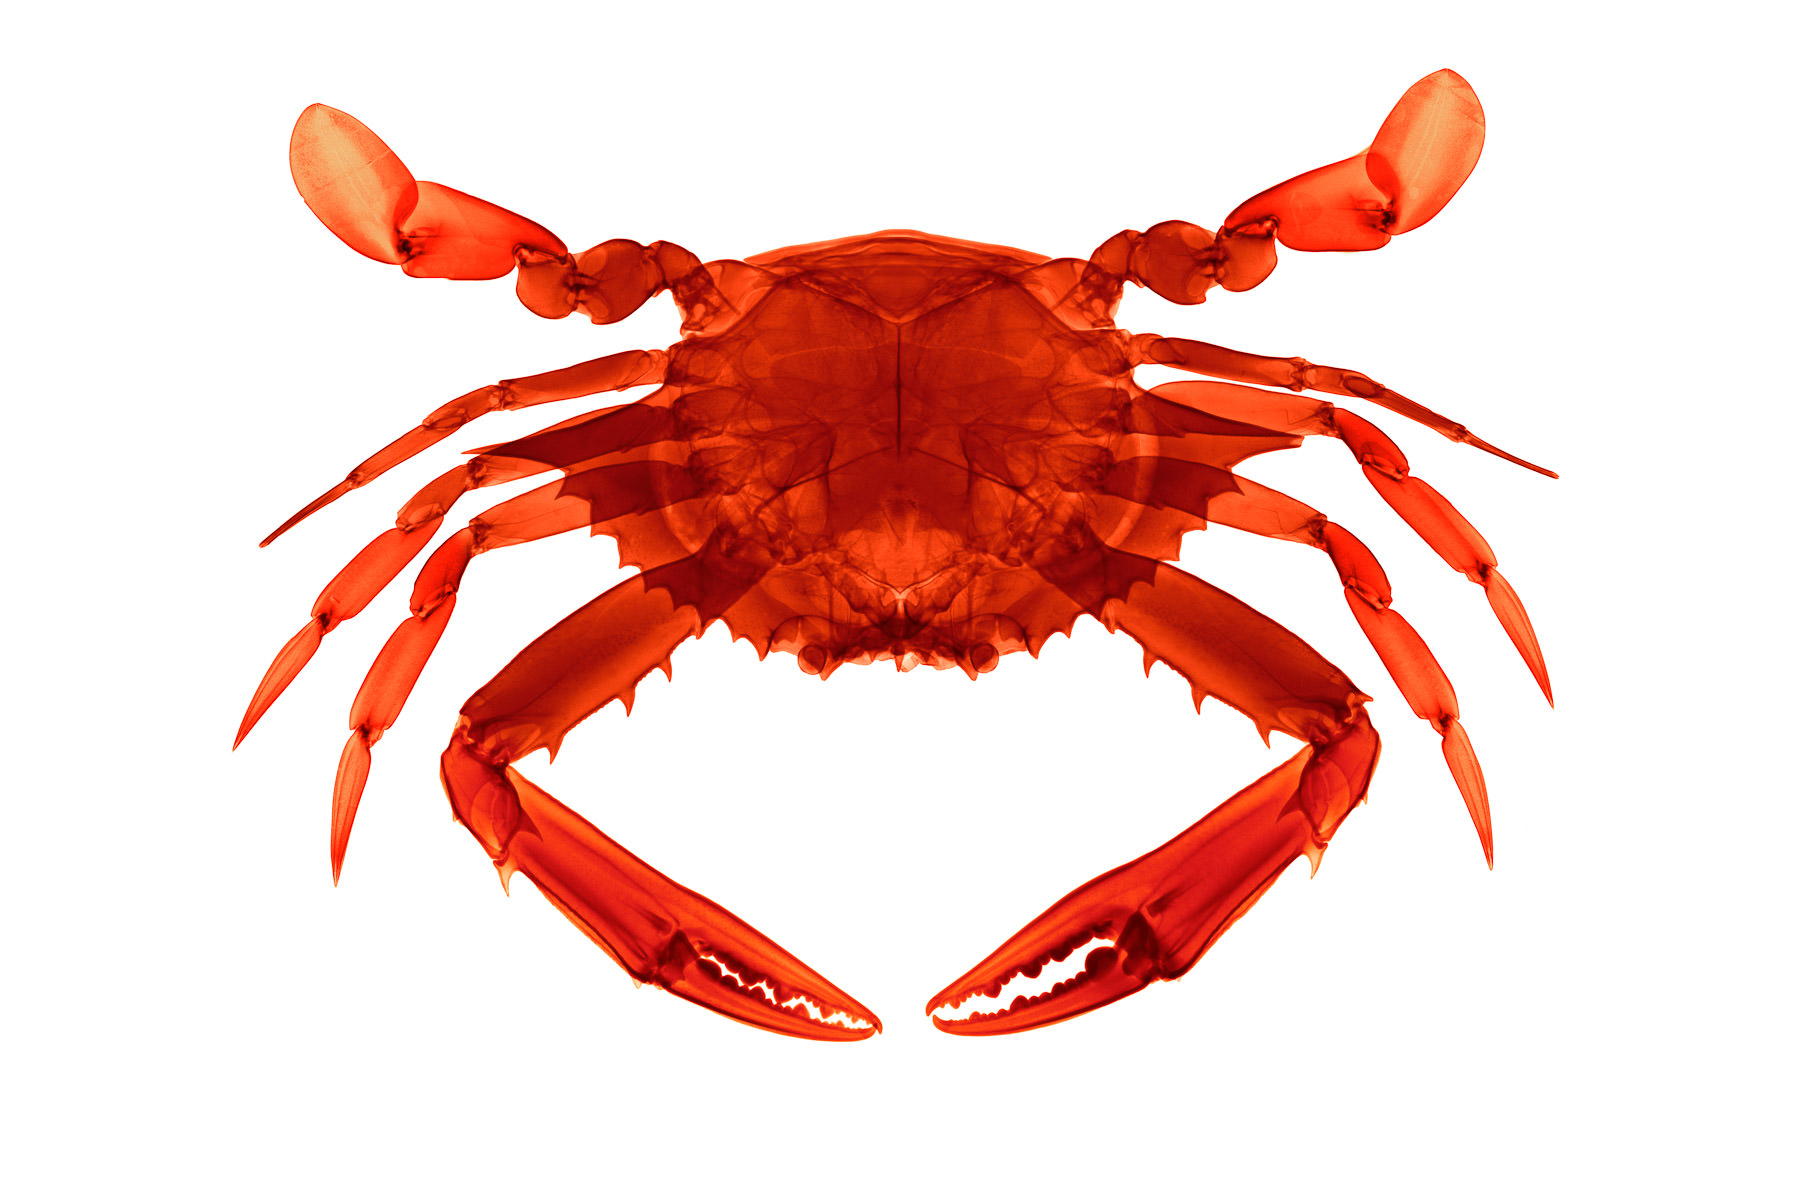 X-ray of a Crab, digital print by Brendan Fitzpatrick